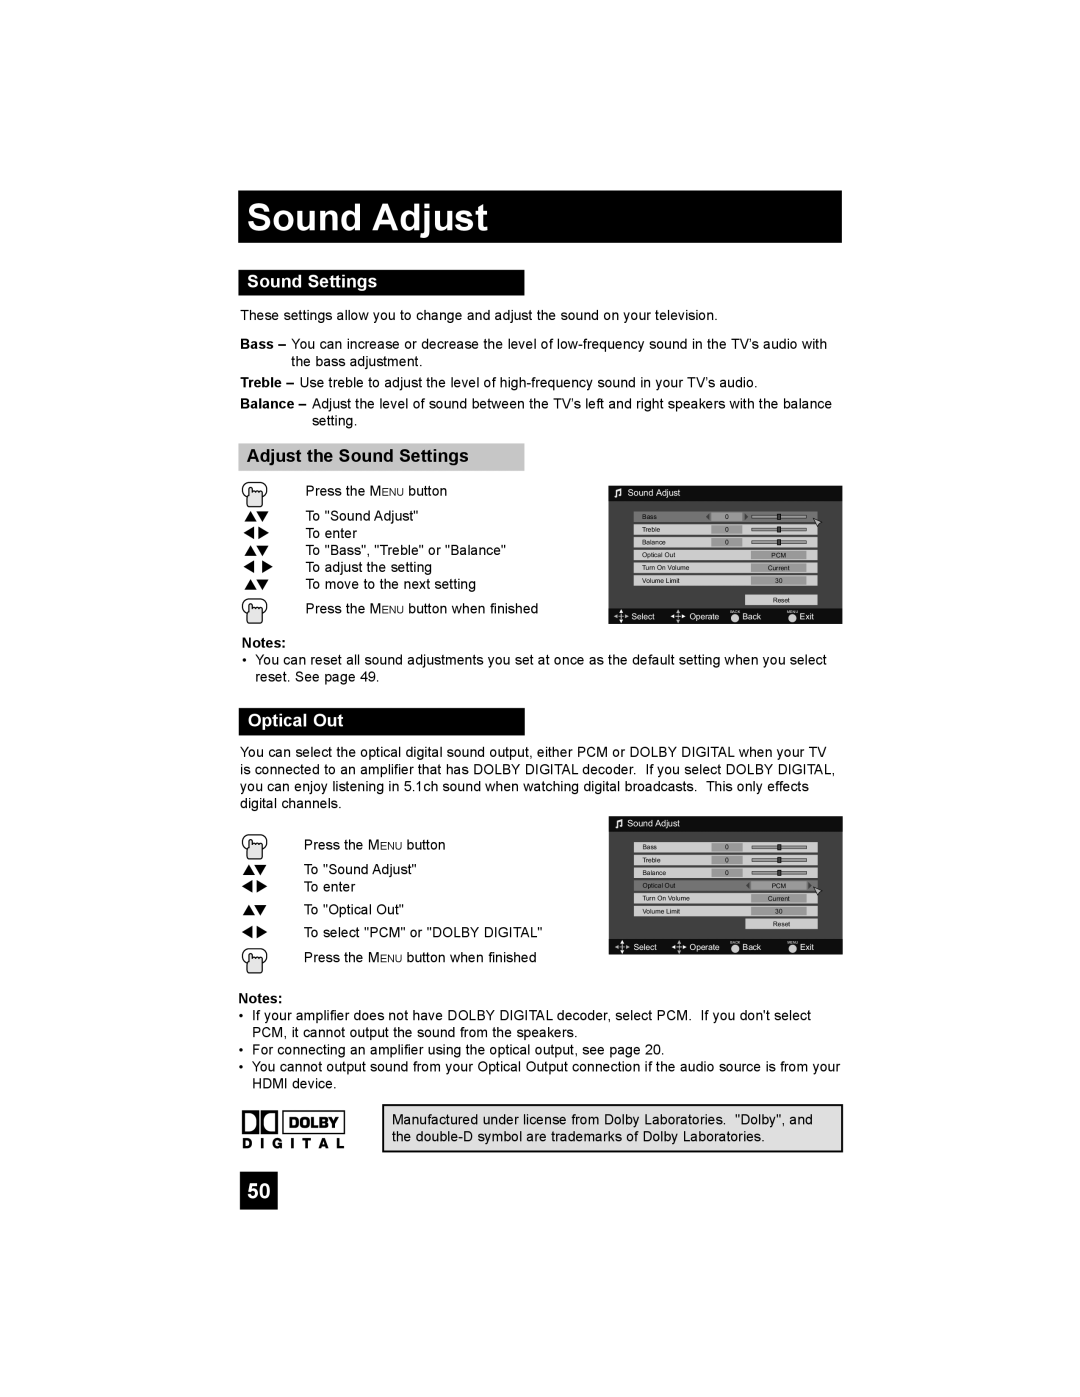 JVC LT-32EX38, LT-42EX38, LT-37EX38 manual Sound Adjust, Adjust the Sound Settings, Optical Out 